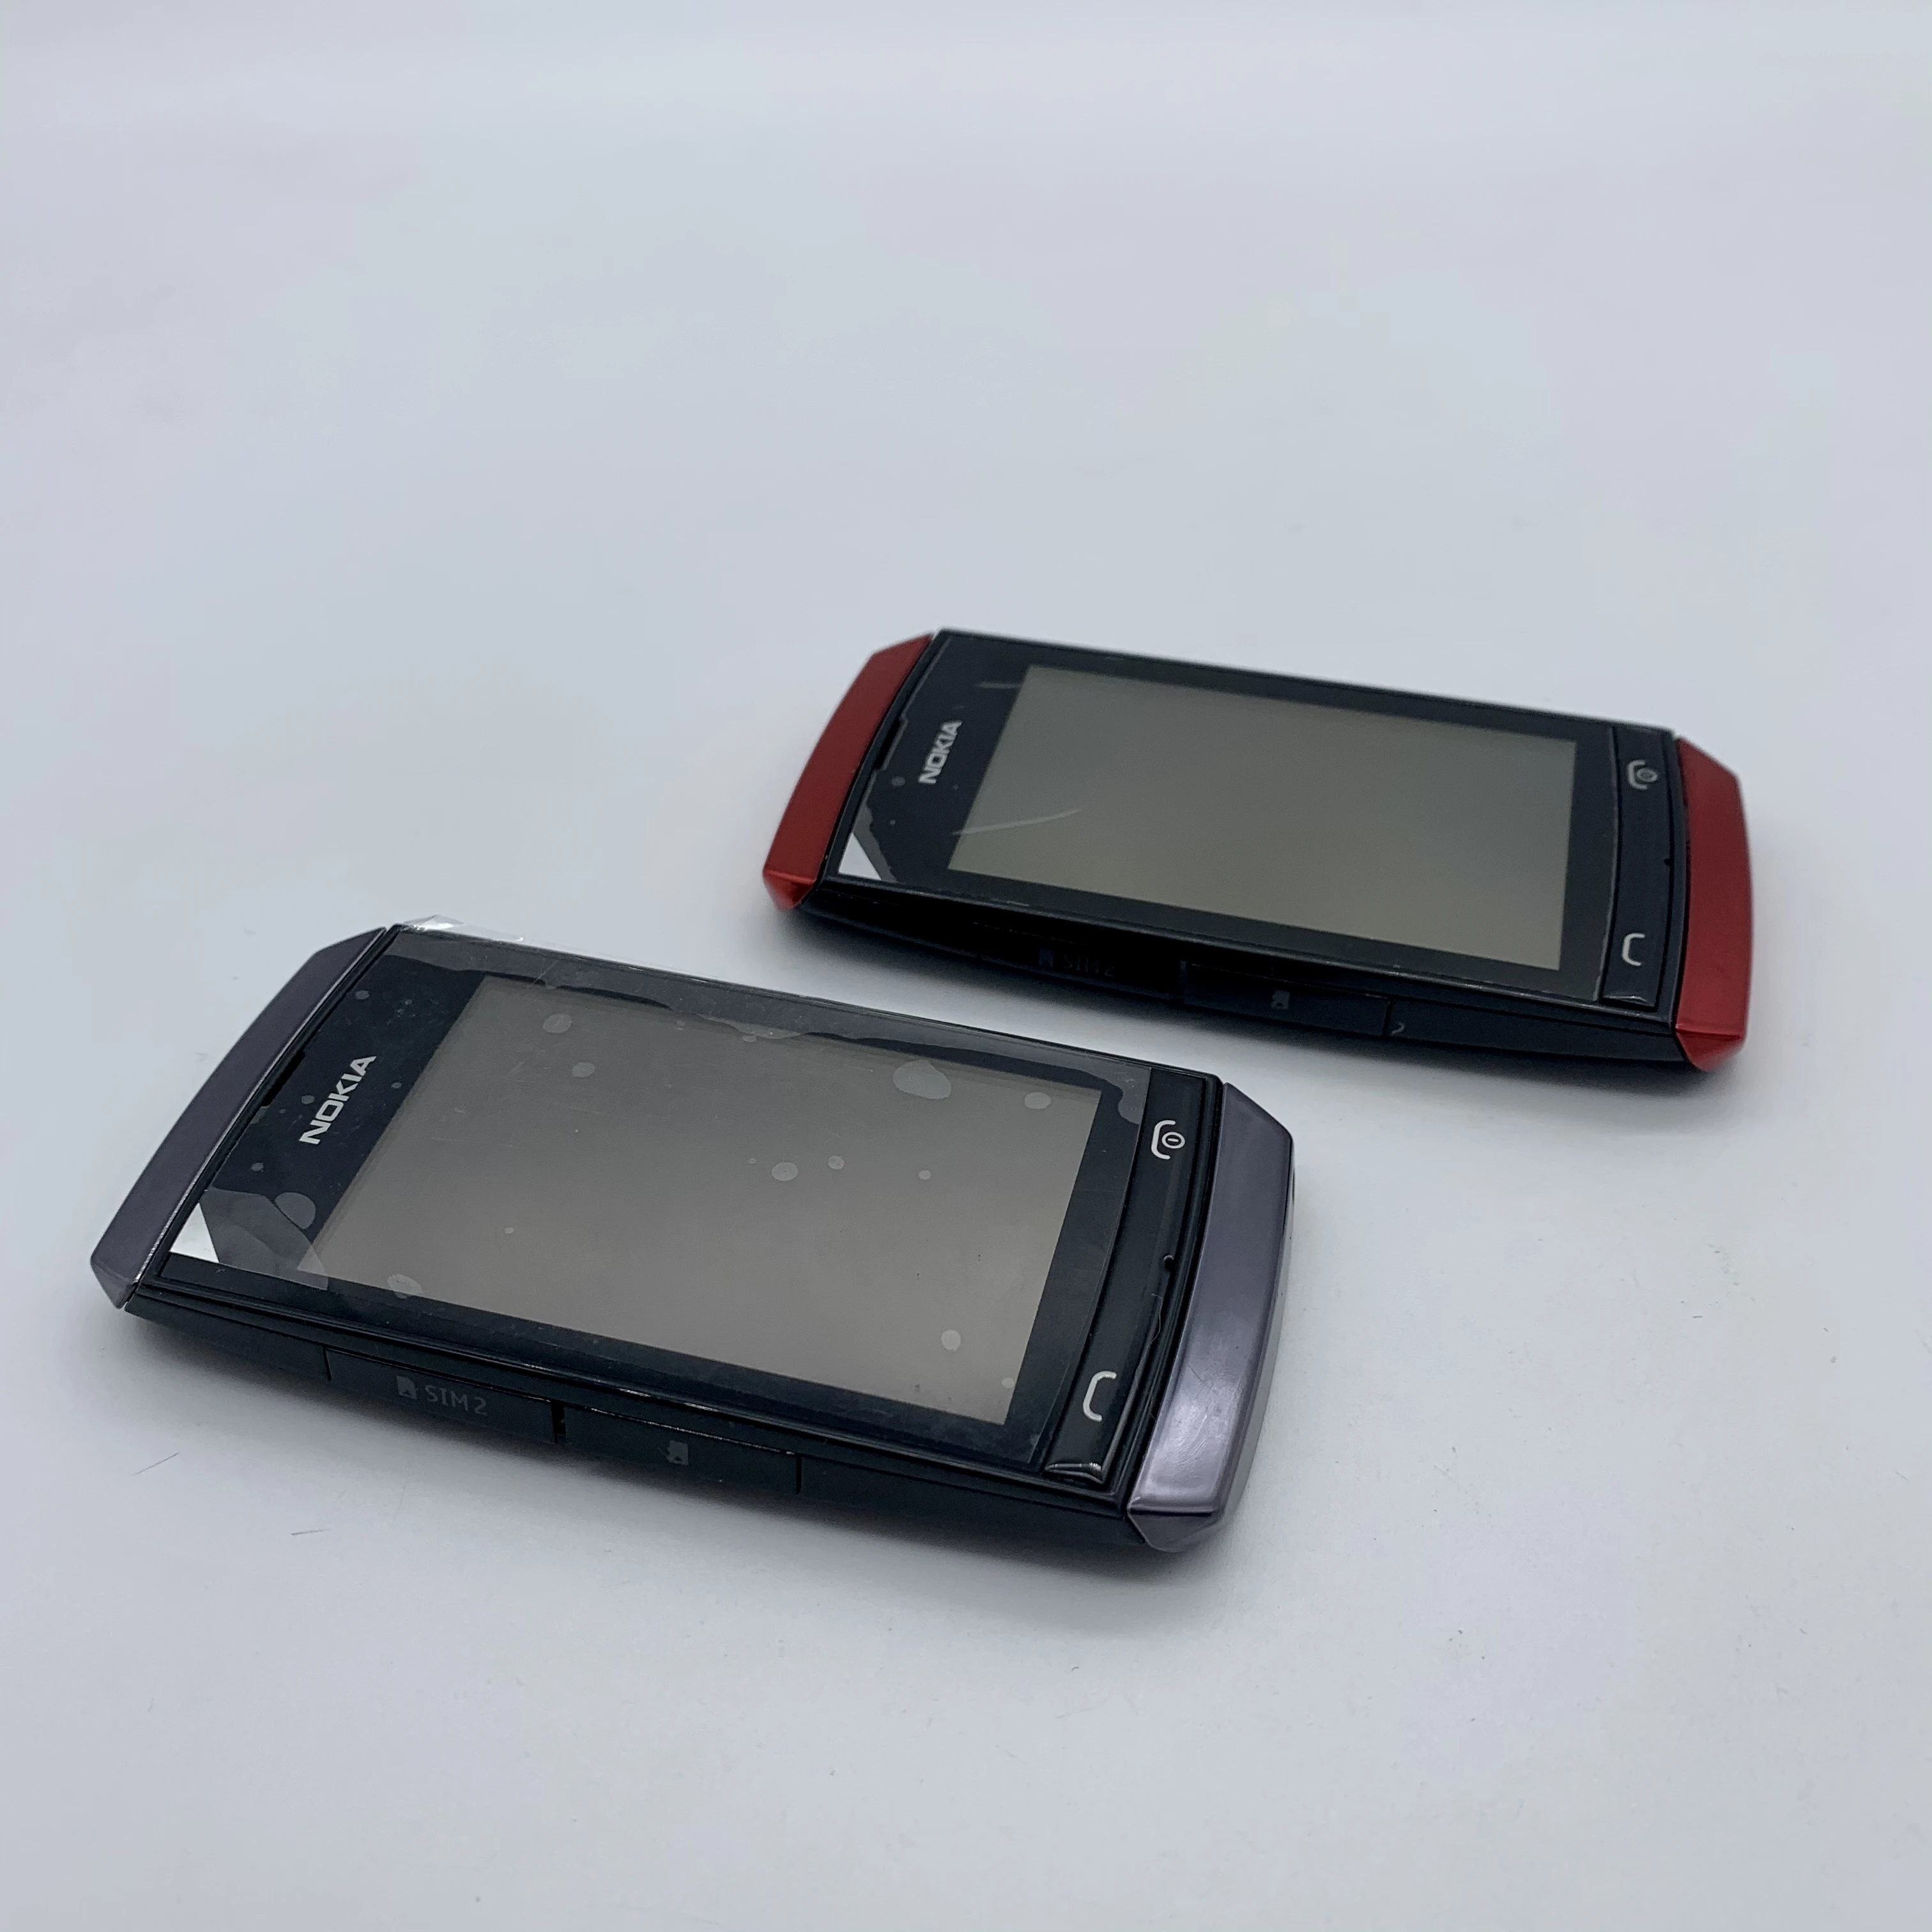 nokia asha 305 refurbished original unlocked nokia asha 305 3 0 2g fm dual sim phone free shipping free global shipping